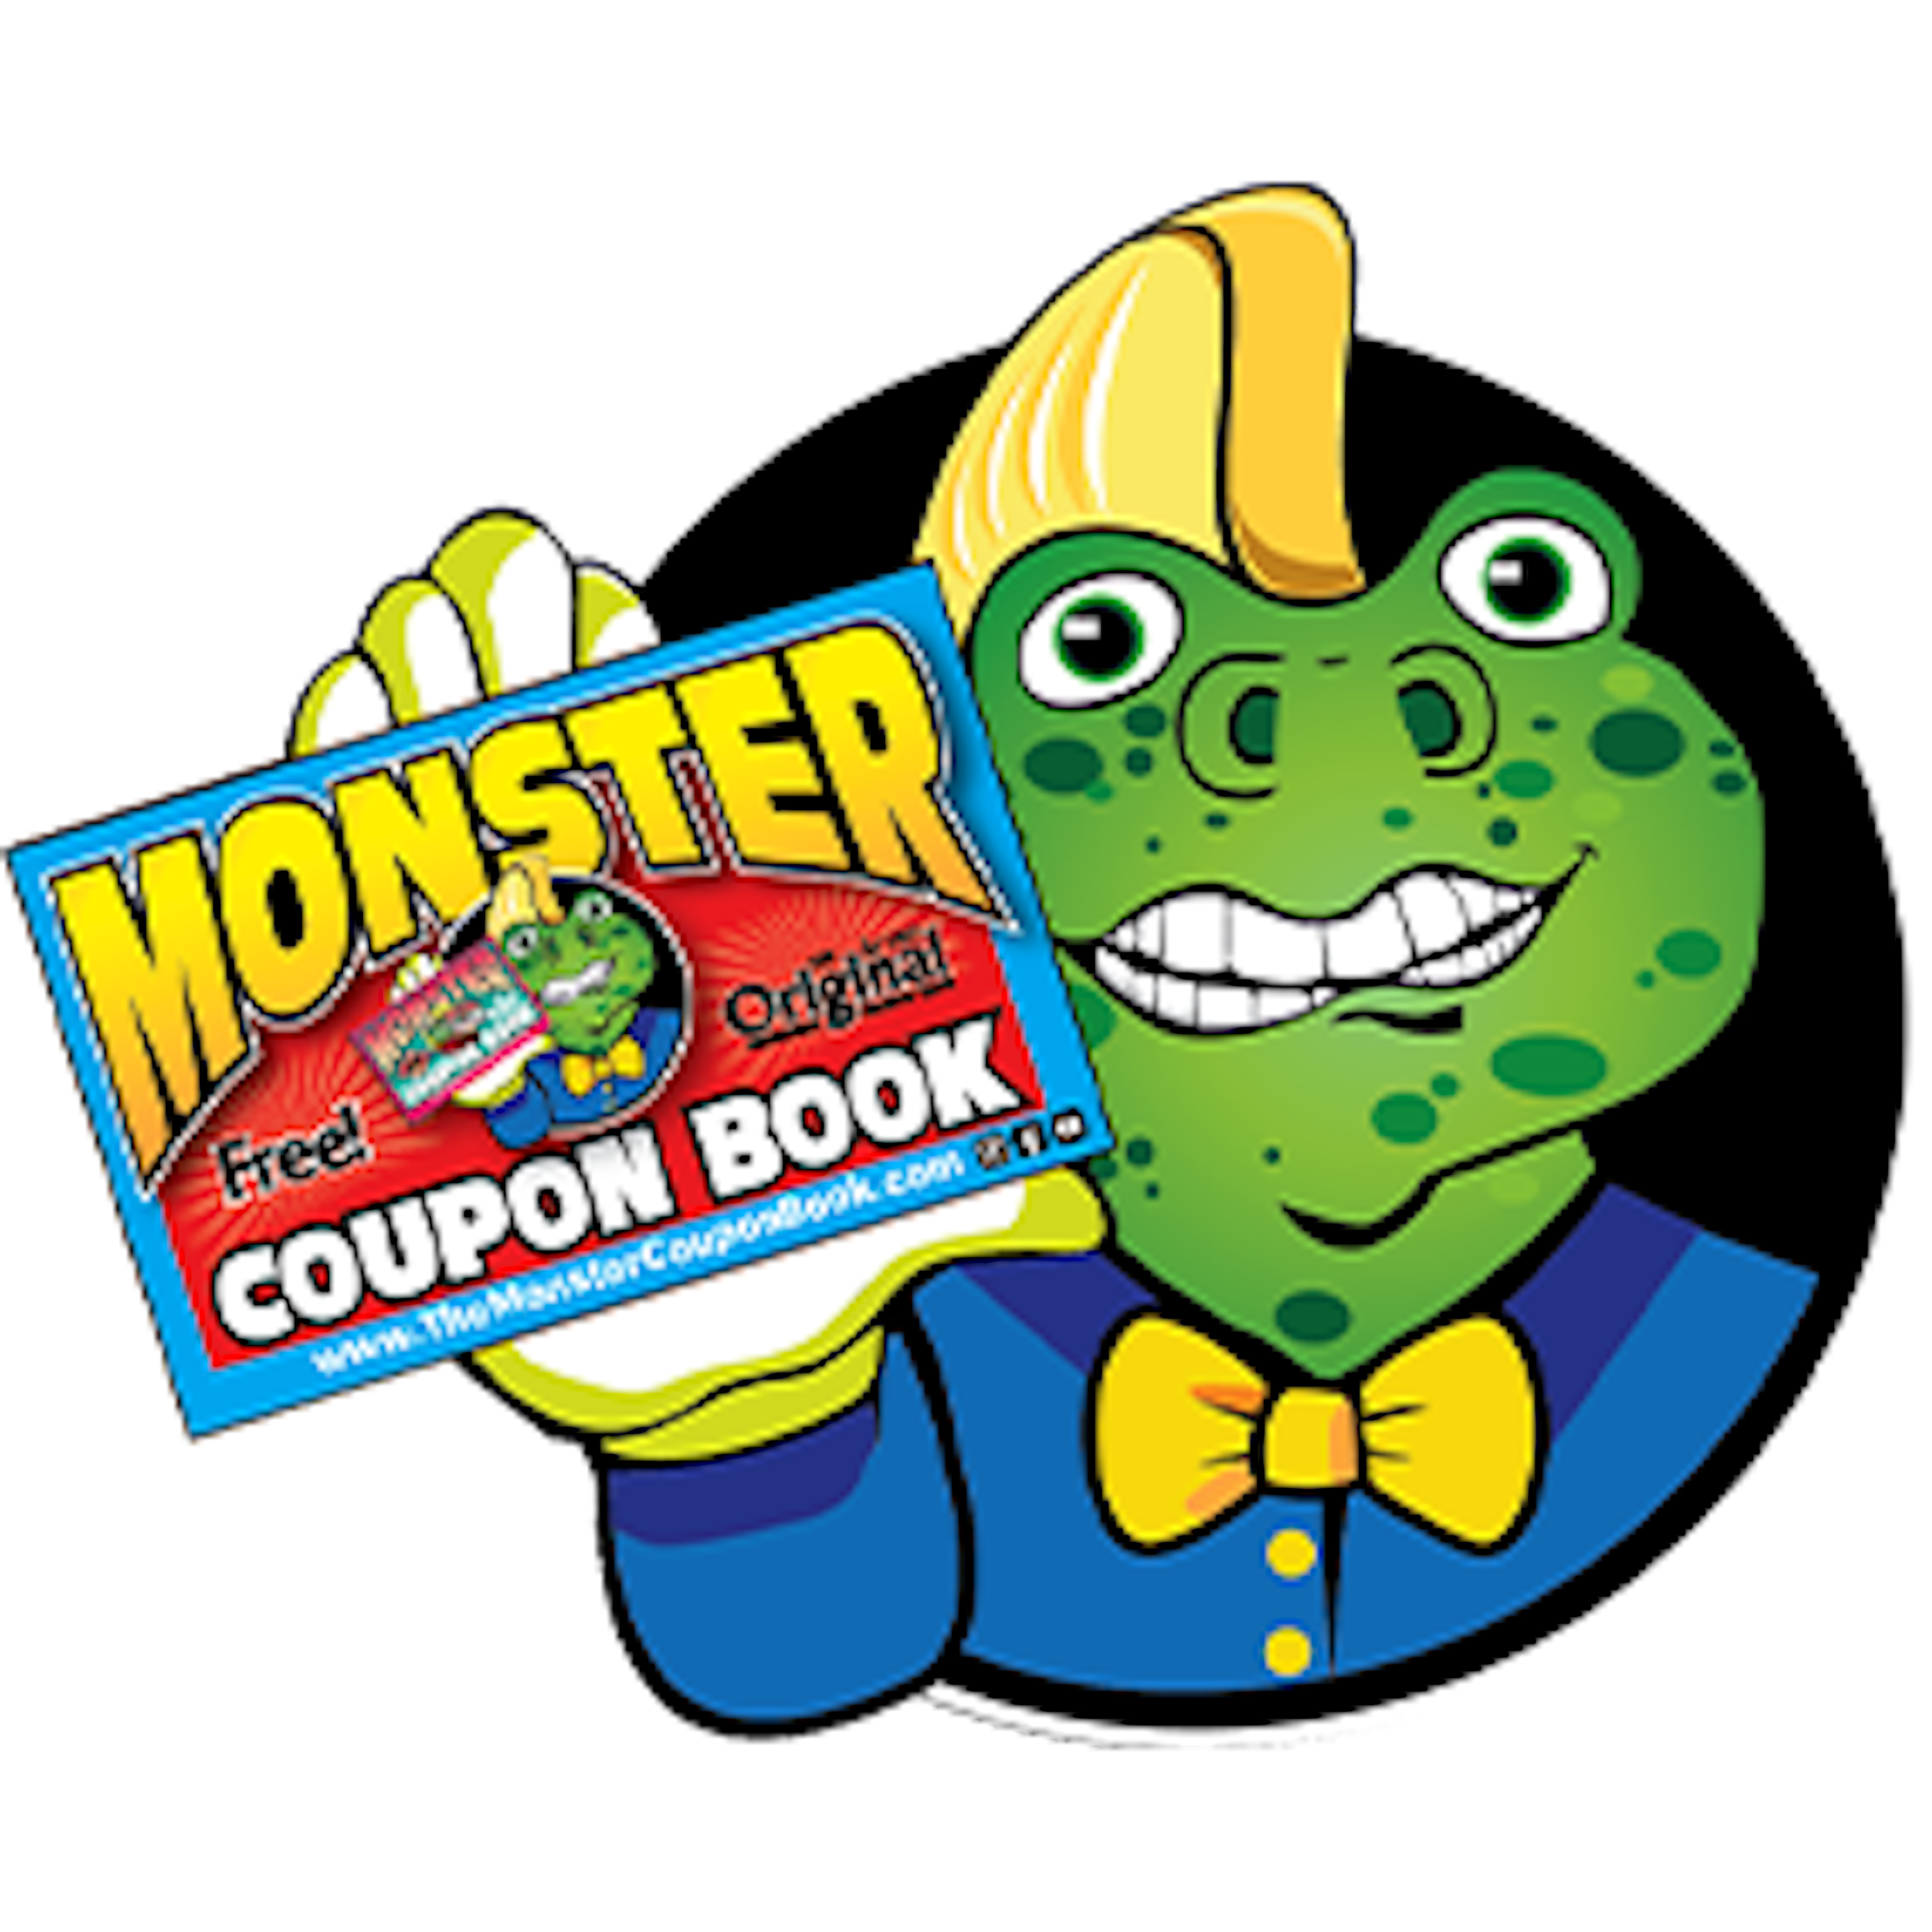 The Monster Coupon Book logo